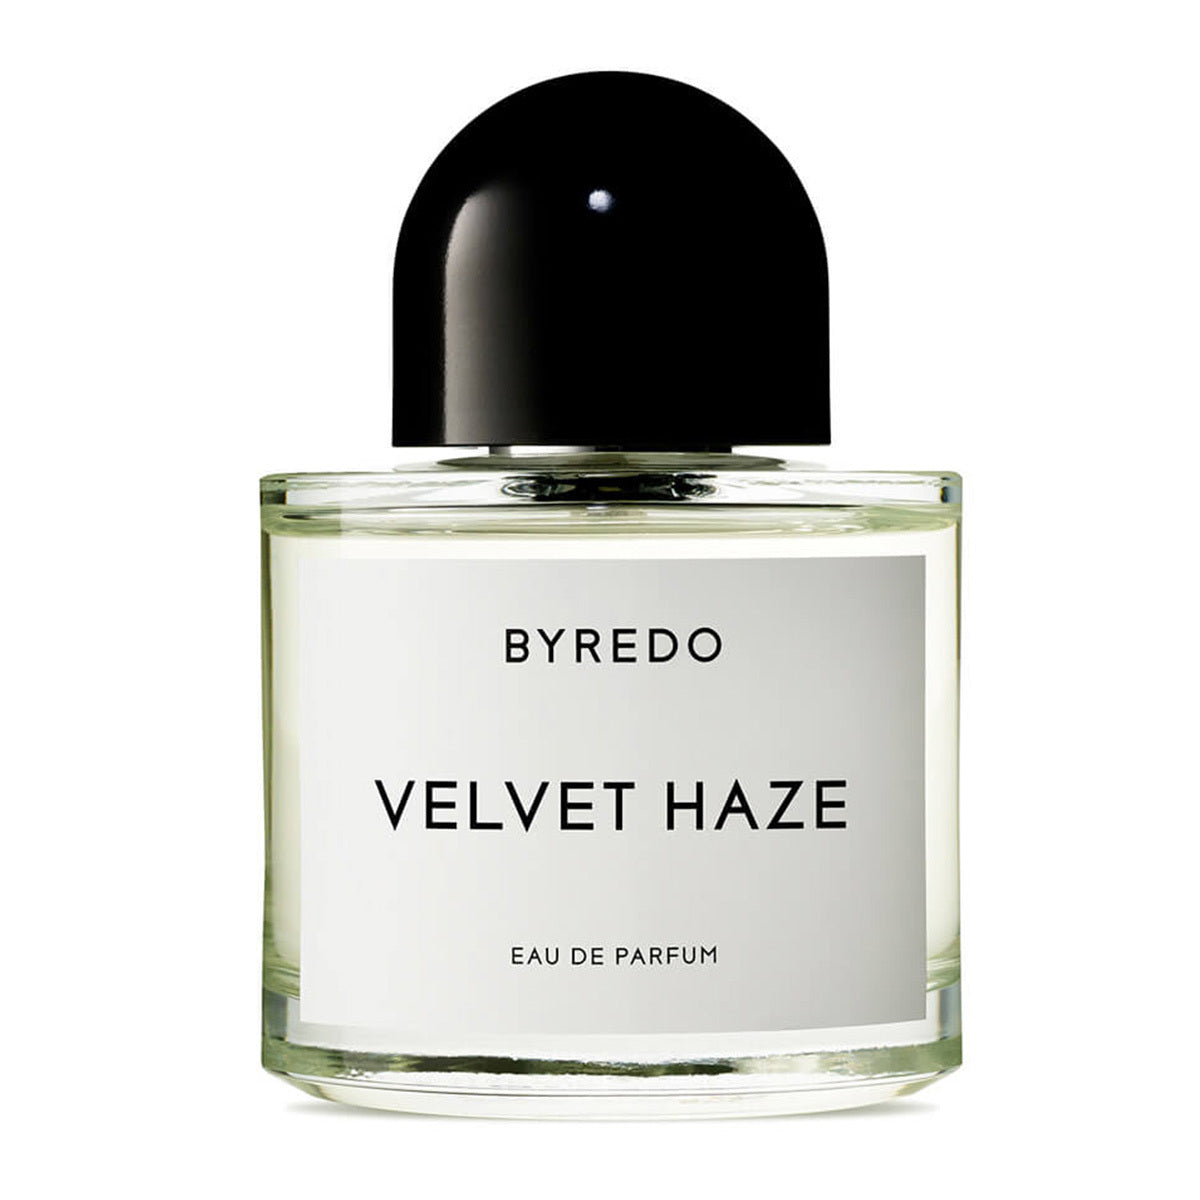 Primary image of Velvet Haze Eau de Parfum